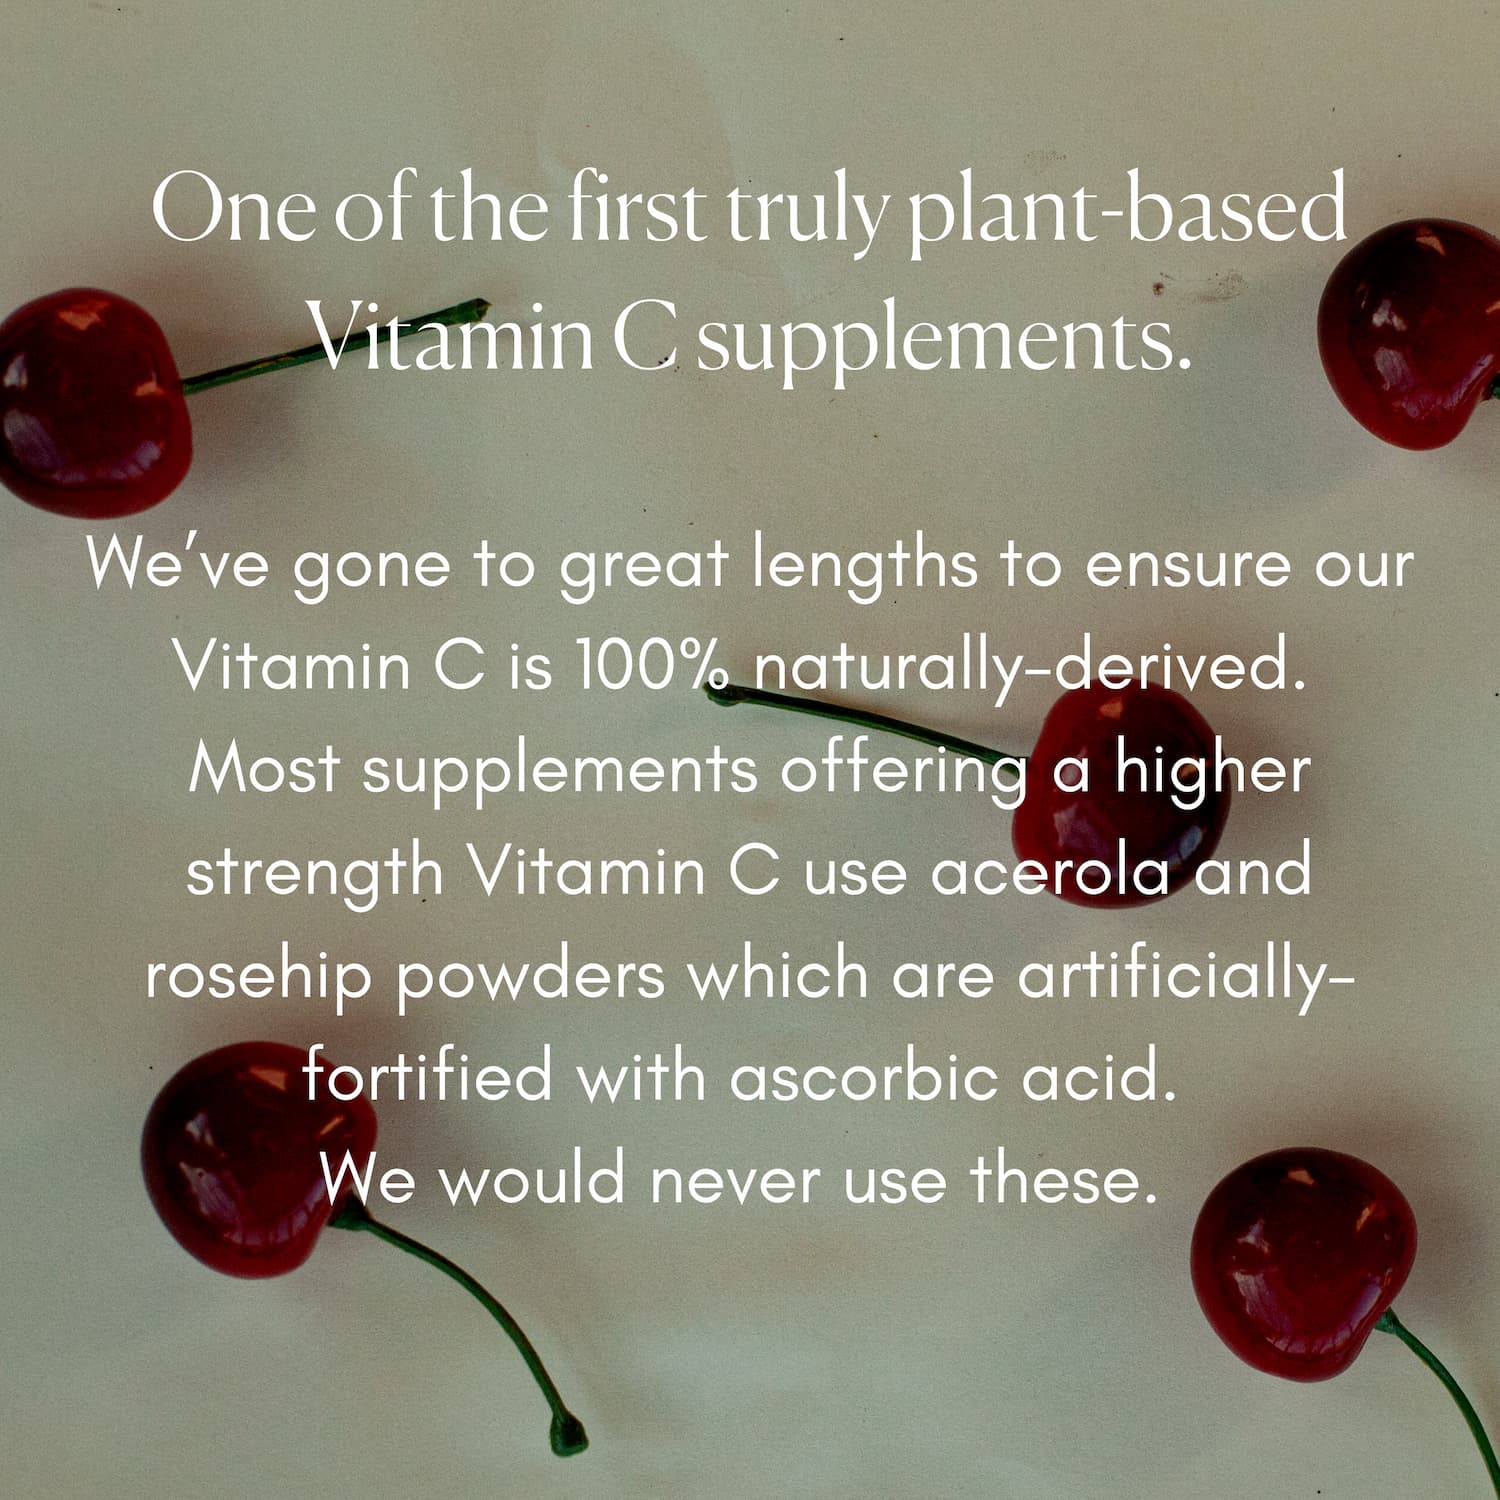 Plant-based Vitamin C